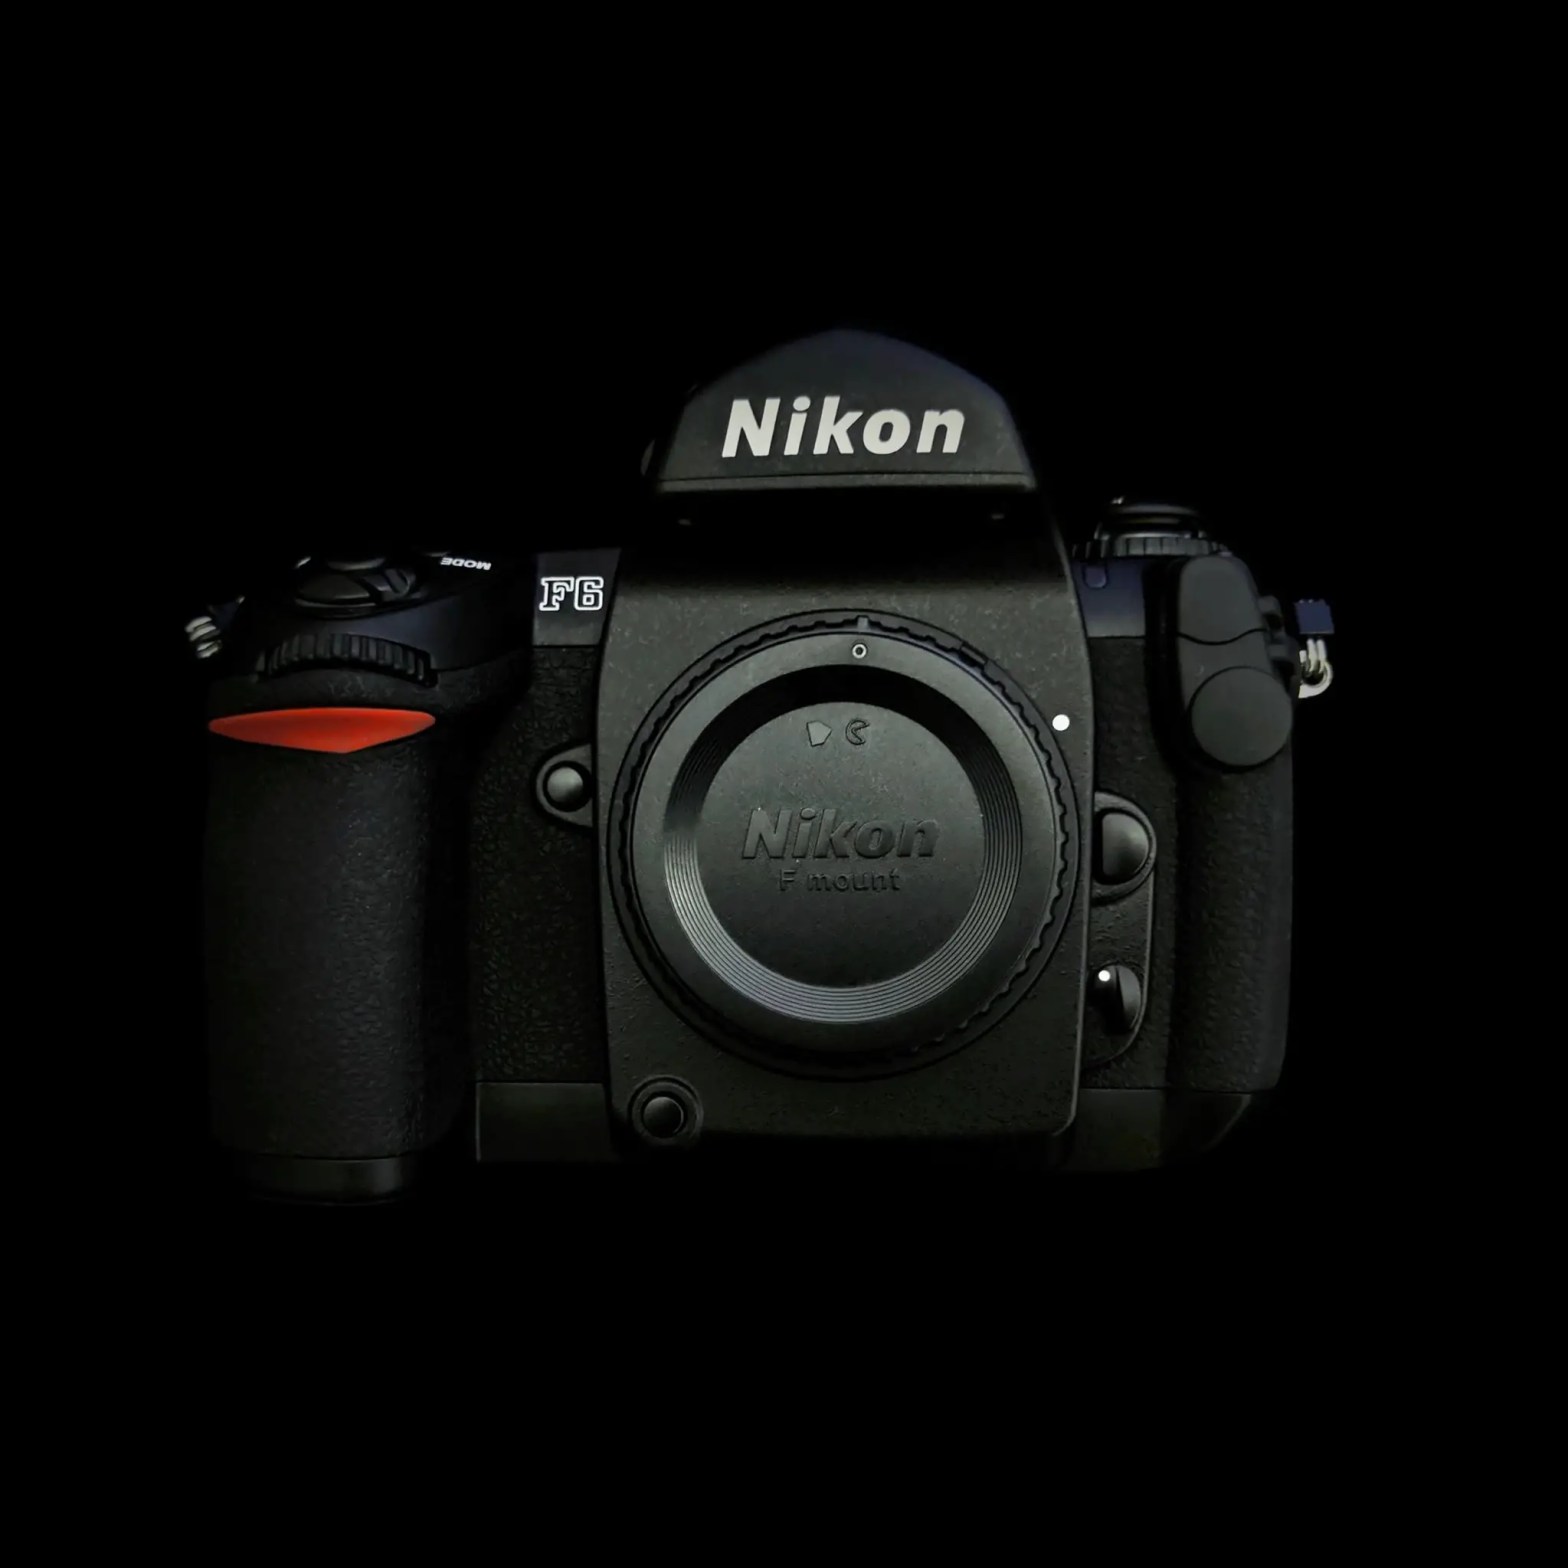 Global Nikon F6 product recall…for 152 cameras